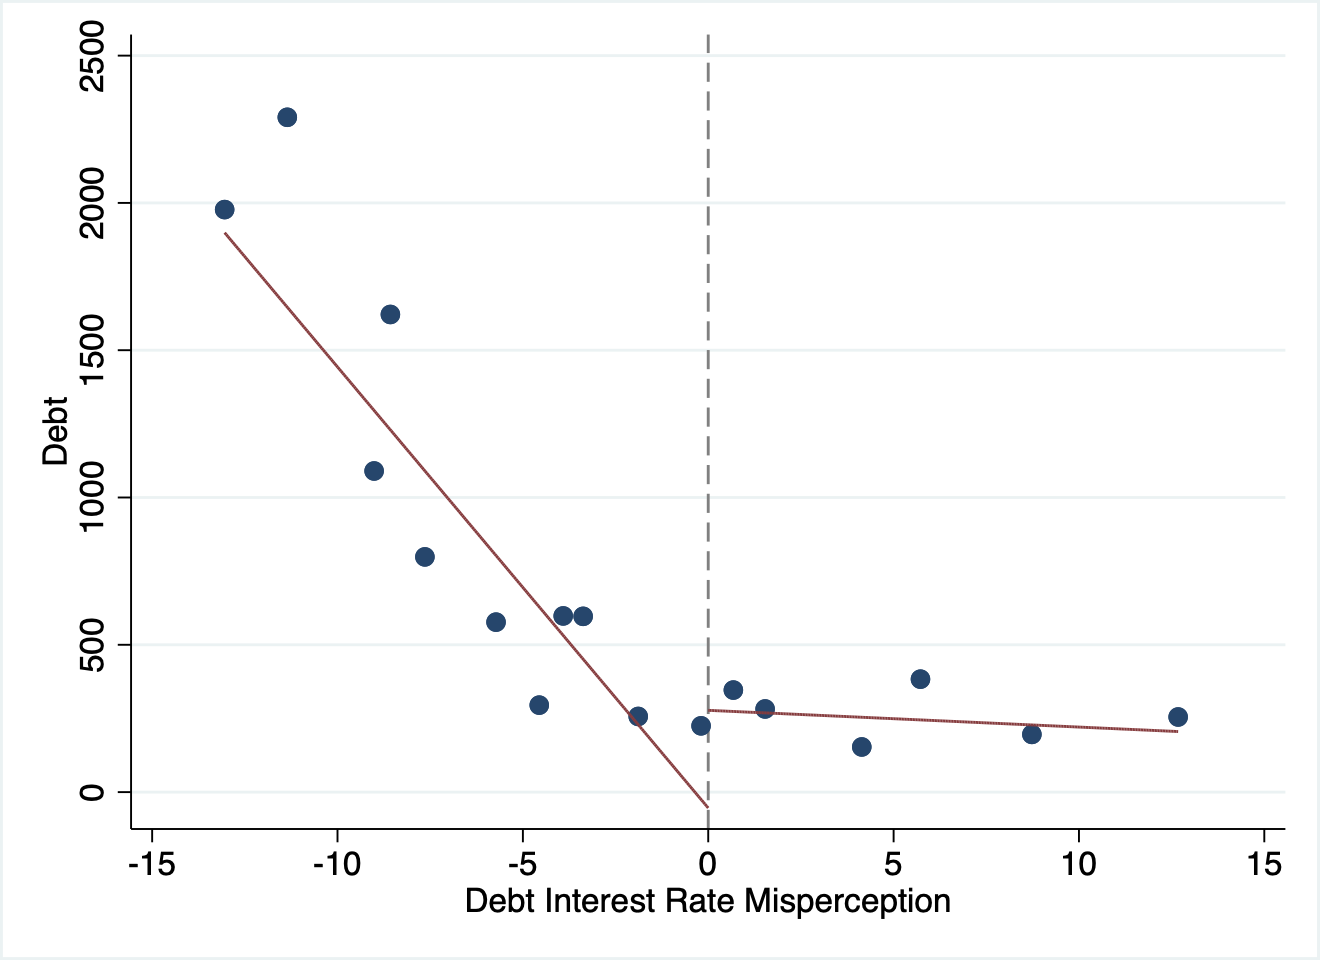 Interest Rate Misperception and Debt